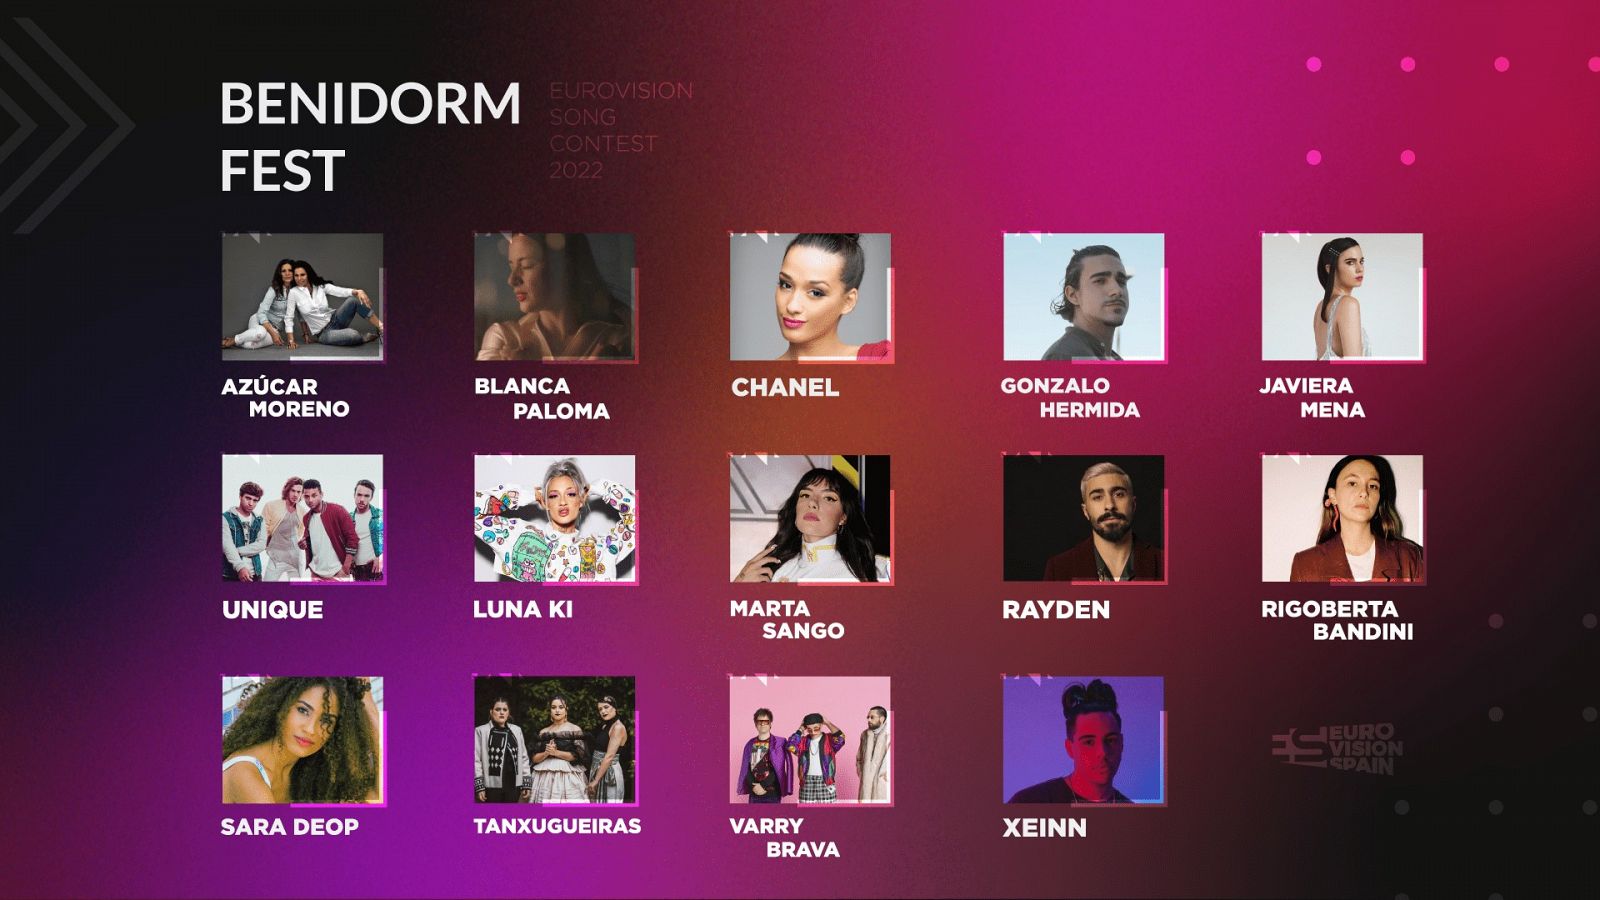 El Benidorm Fest persenta a los artistas que competirán por representar a España en Eurovisión